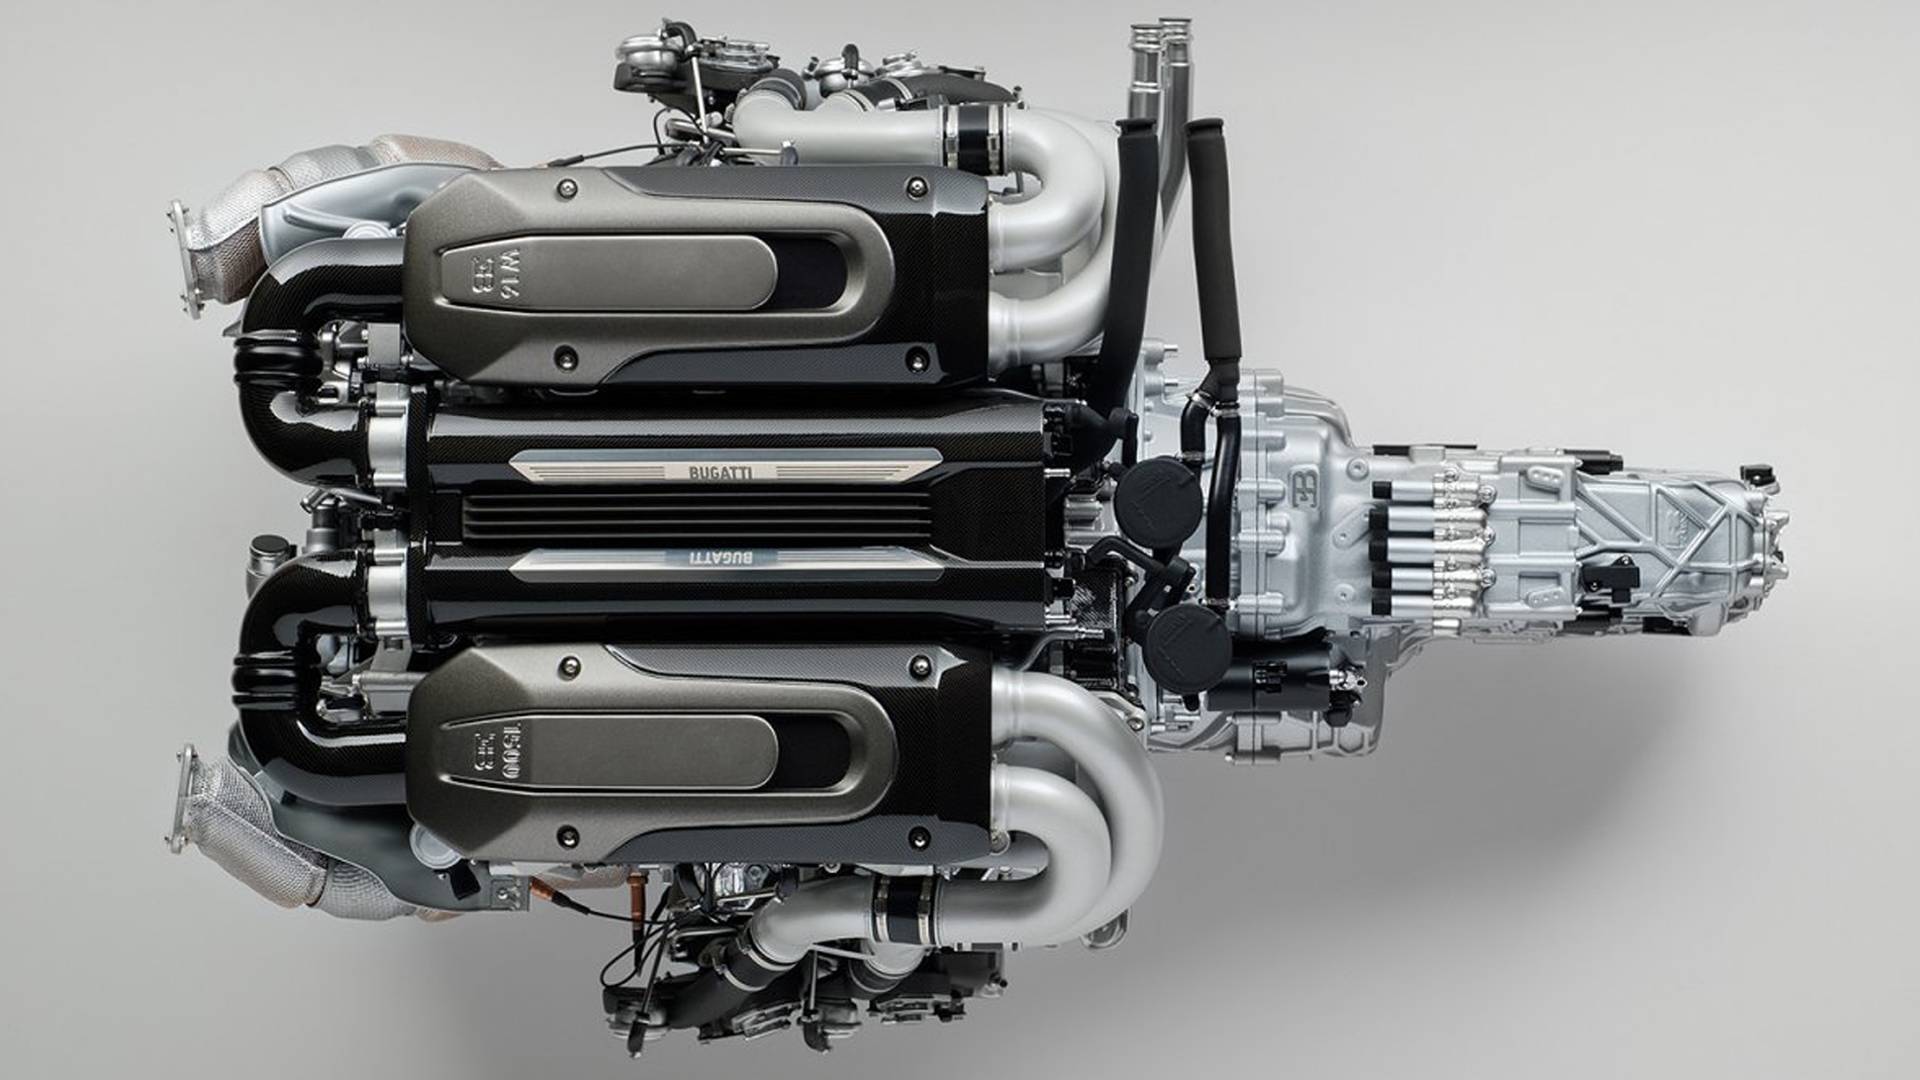 Bugatti Chiron's engine